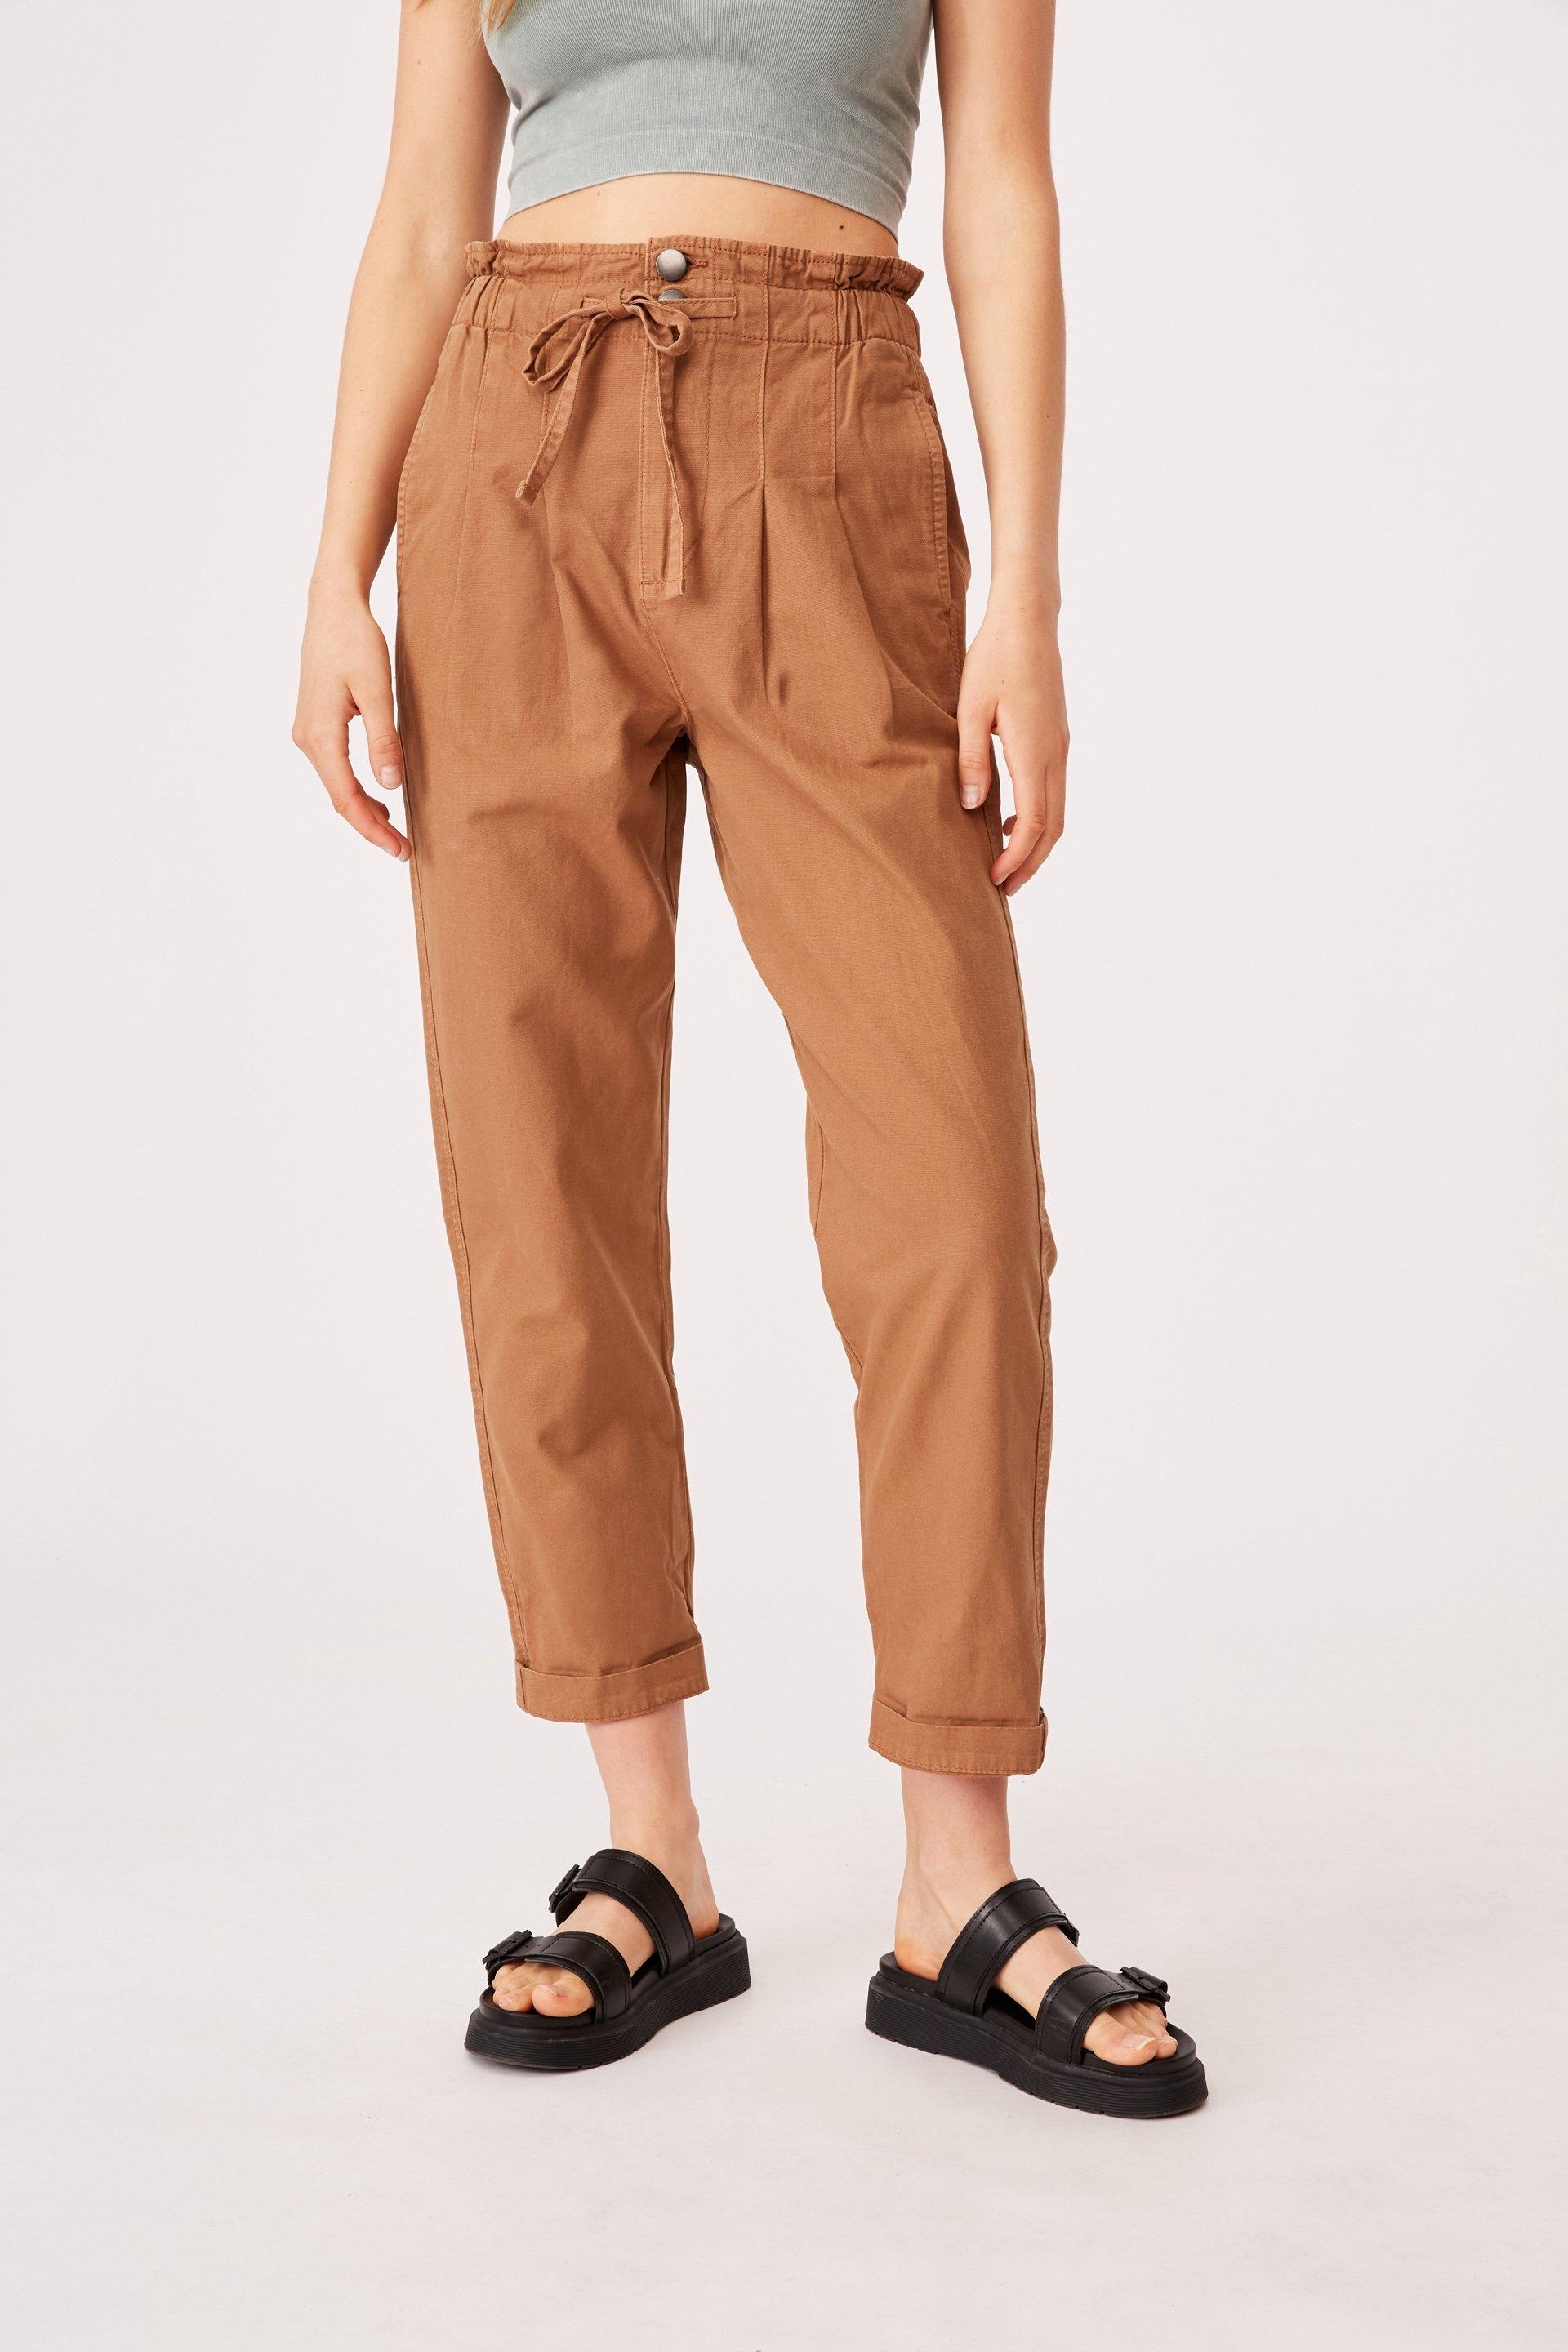 Paperbag pant - mocha bisque Cotton On Trousers | Superbalist.com